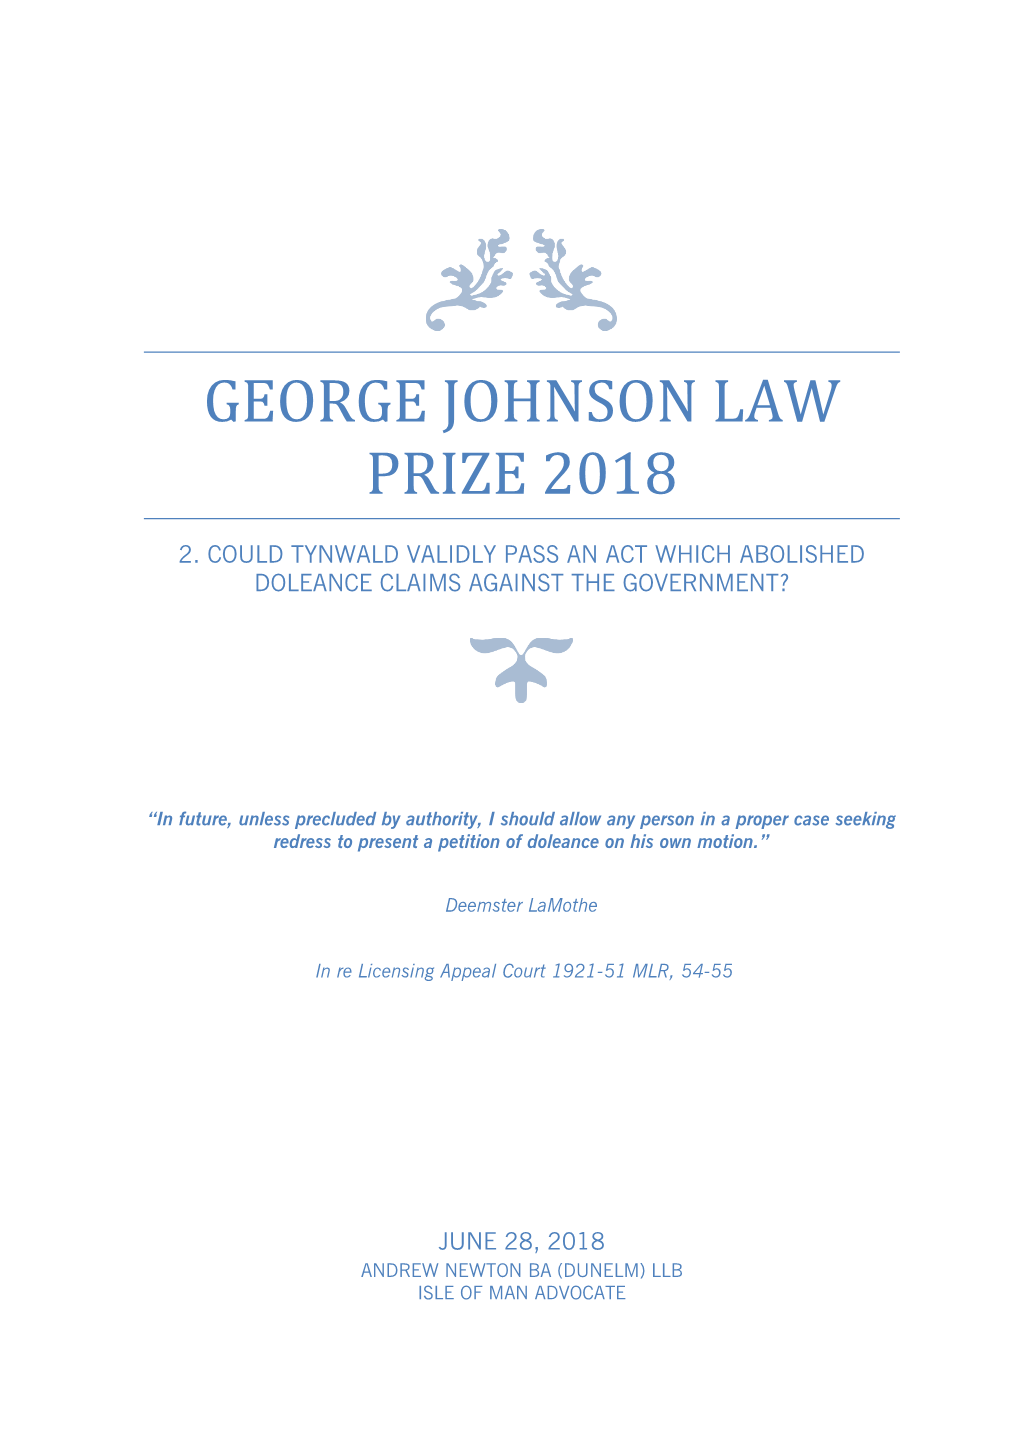 George Johnson Law Prize 2018